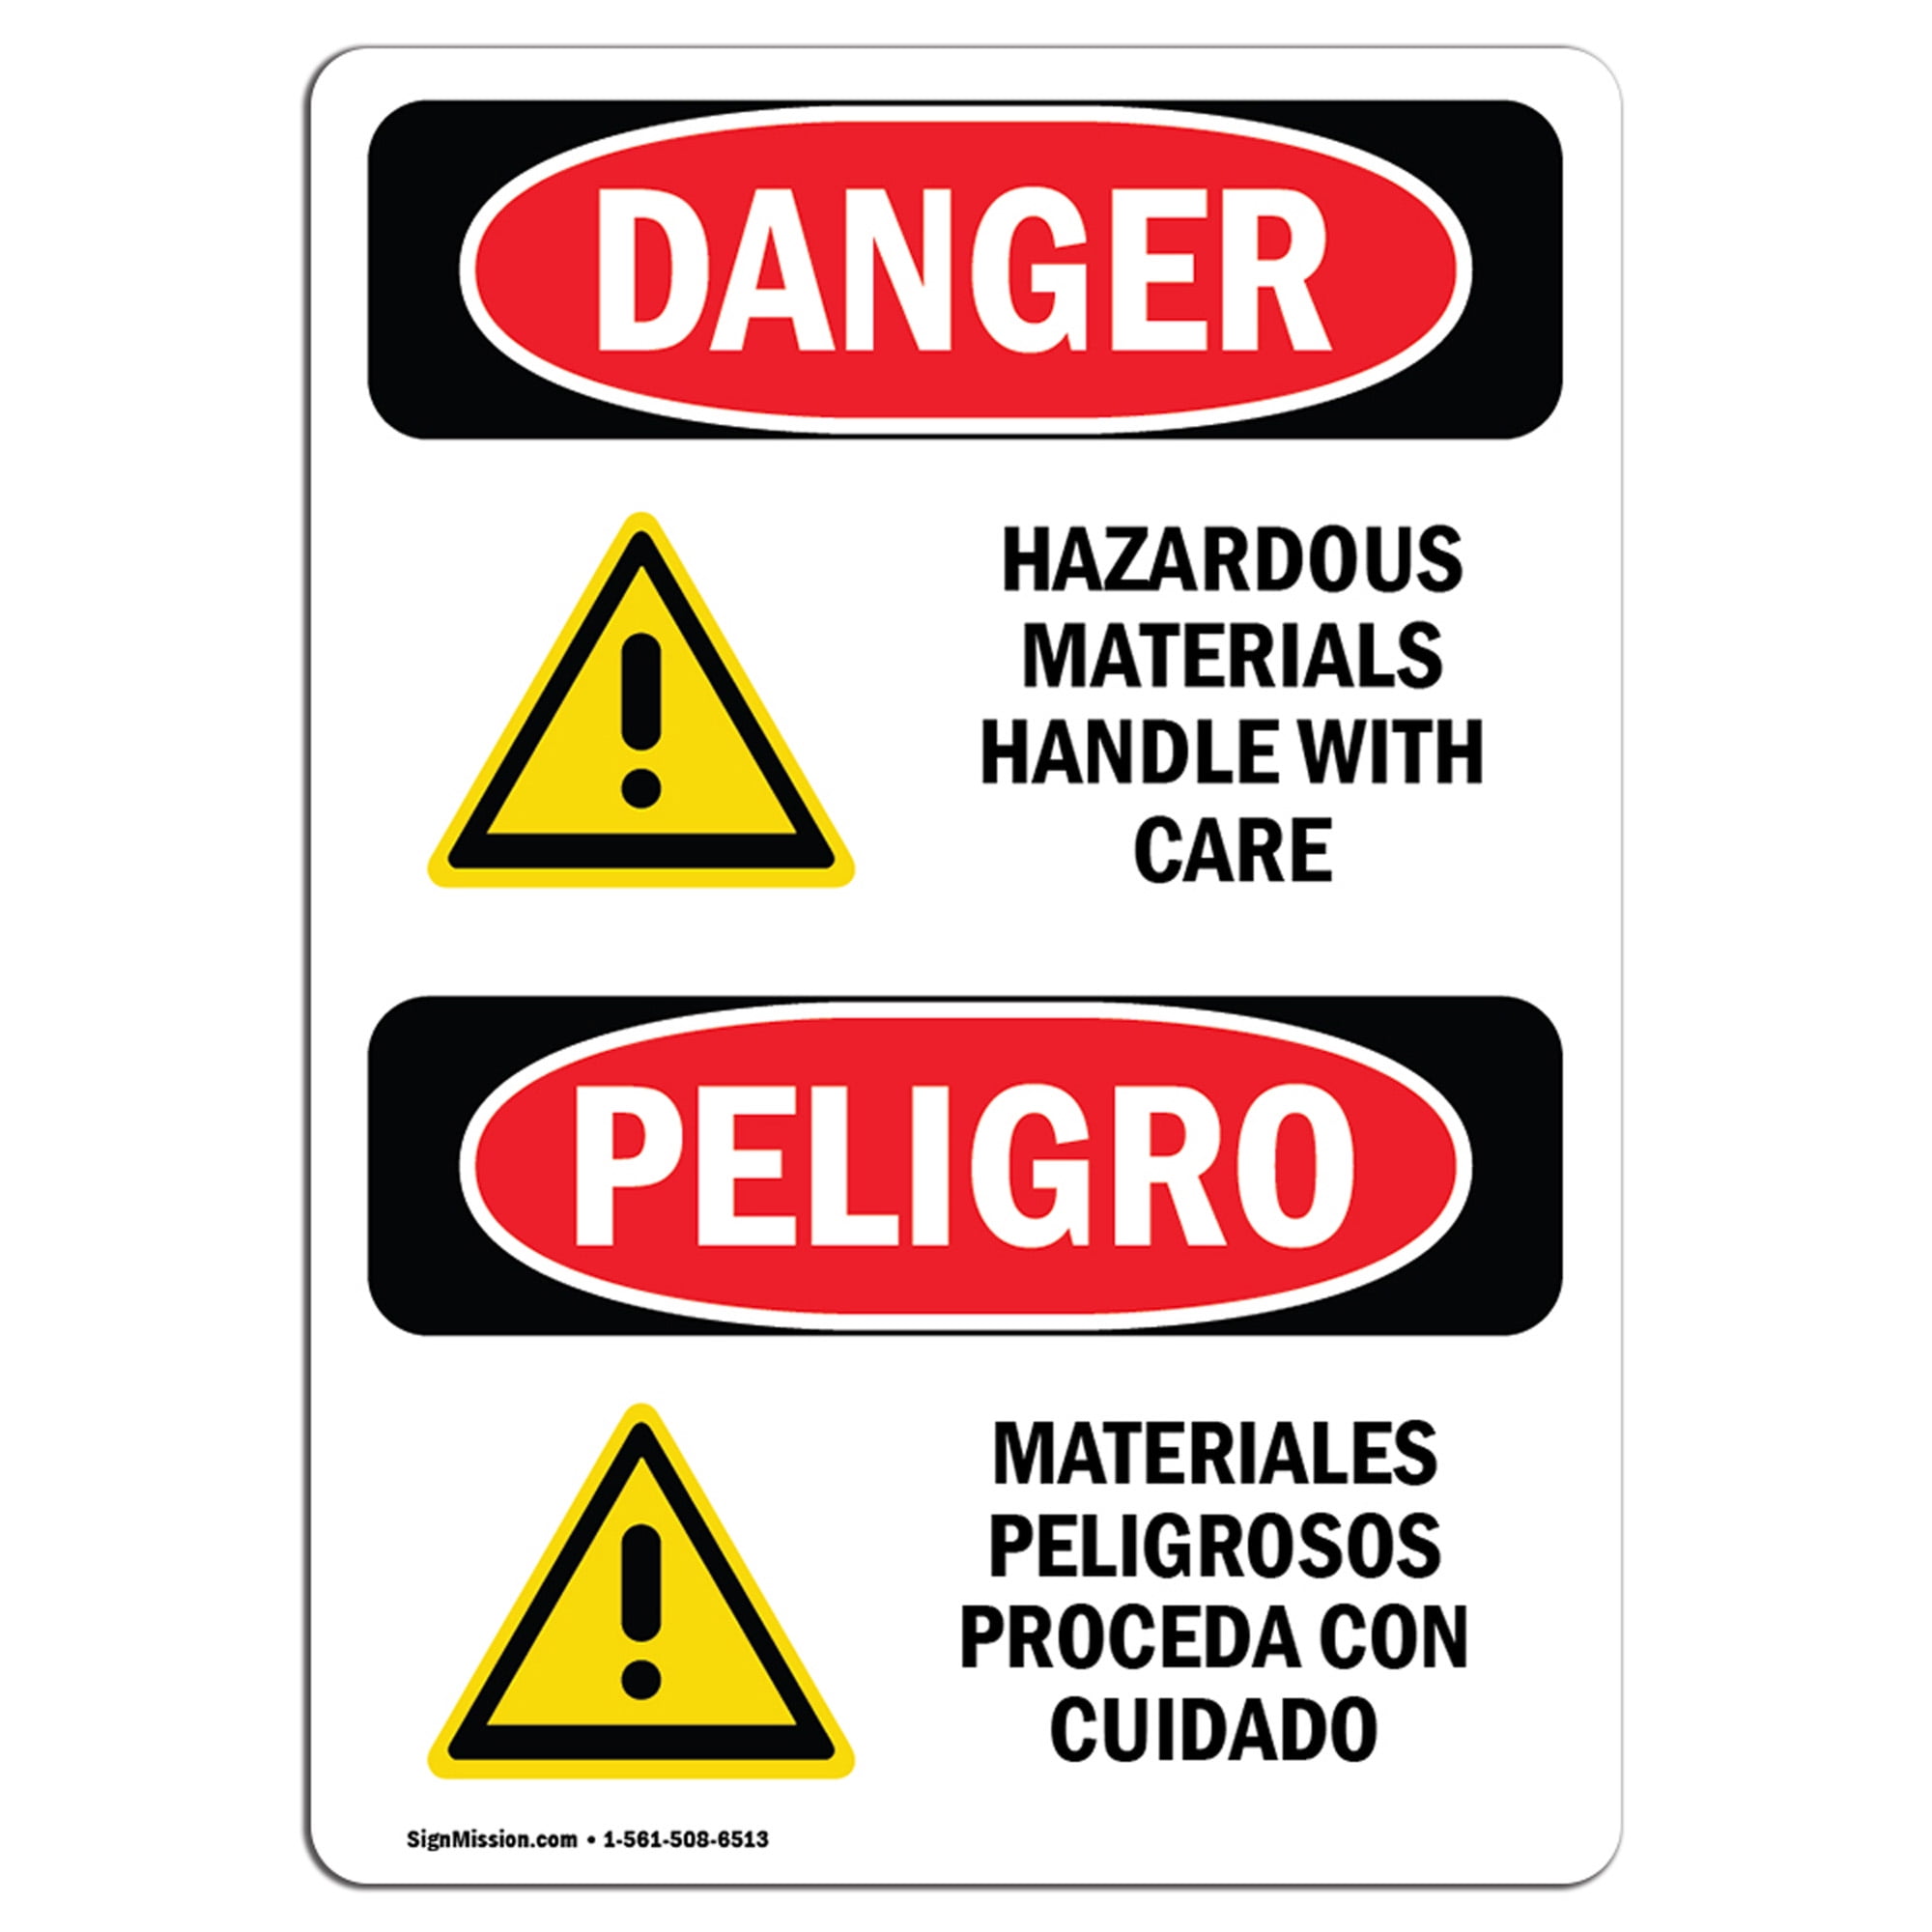 Osha Danger Hazardous Materials Handle With Care Heavy Duty Sign Or Label Walmart Com Walmart Com